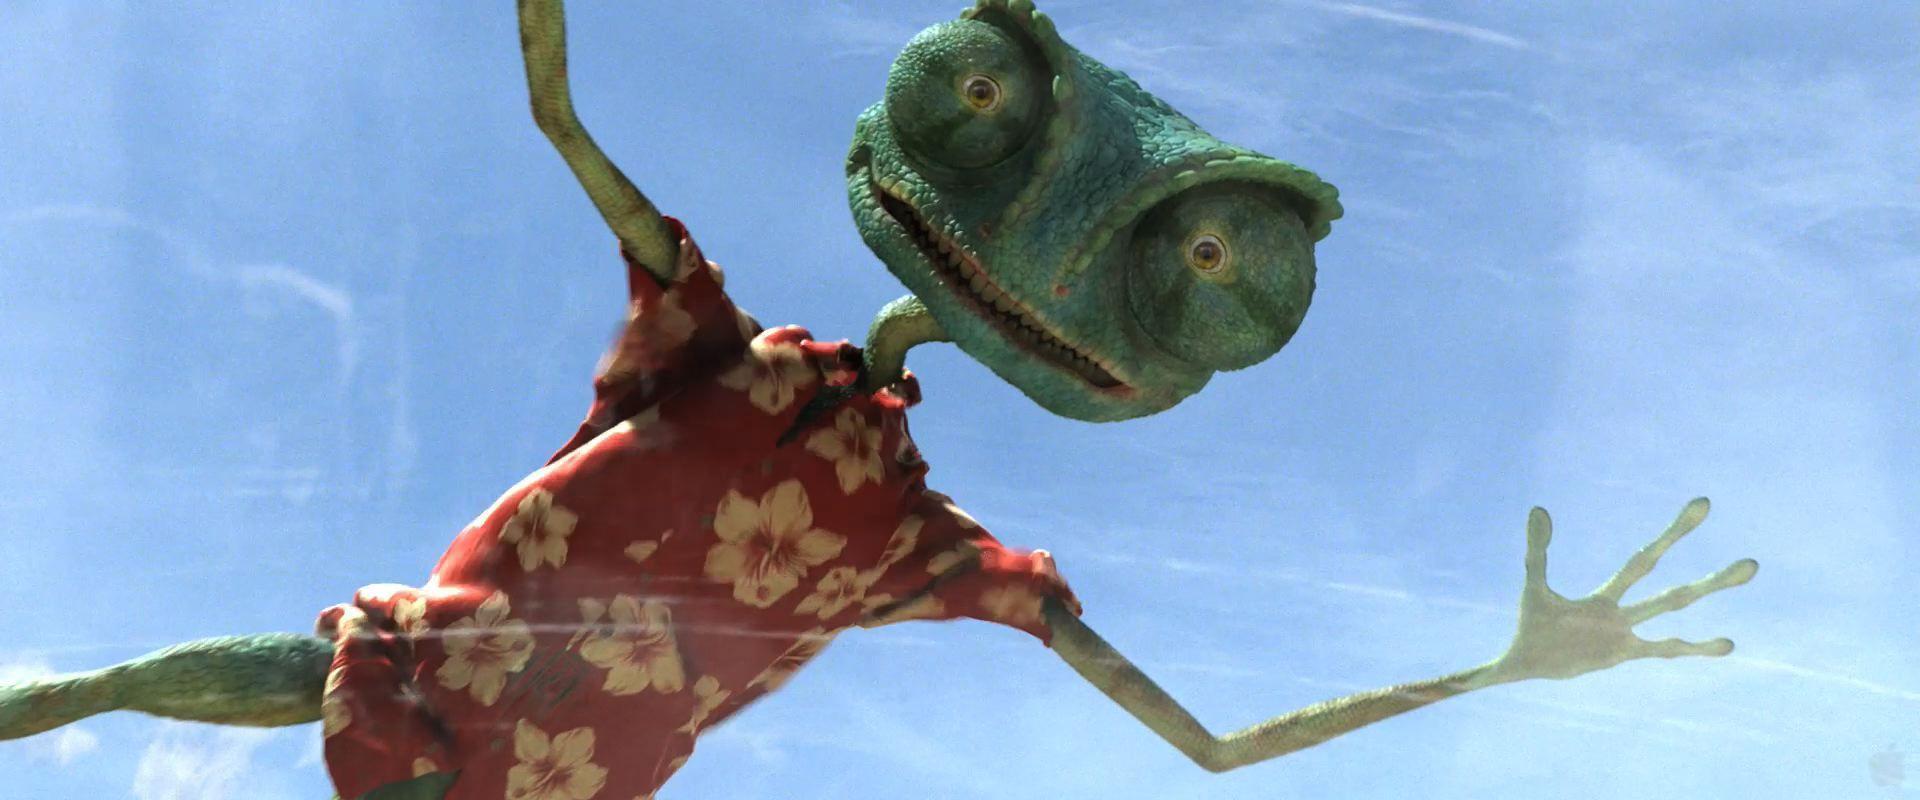 Chameleon on a Windshield from Rango Desktop Wallpaper